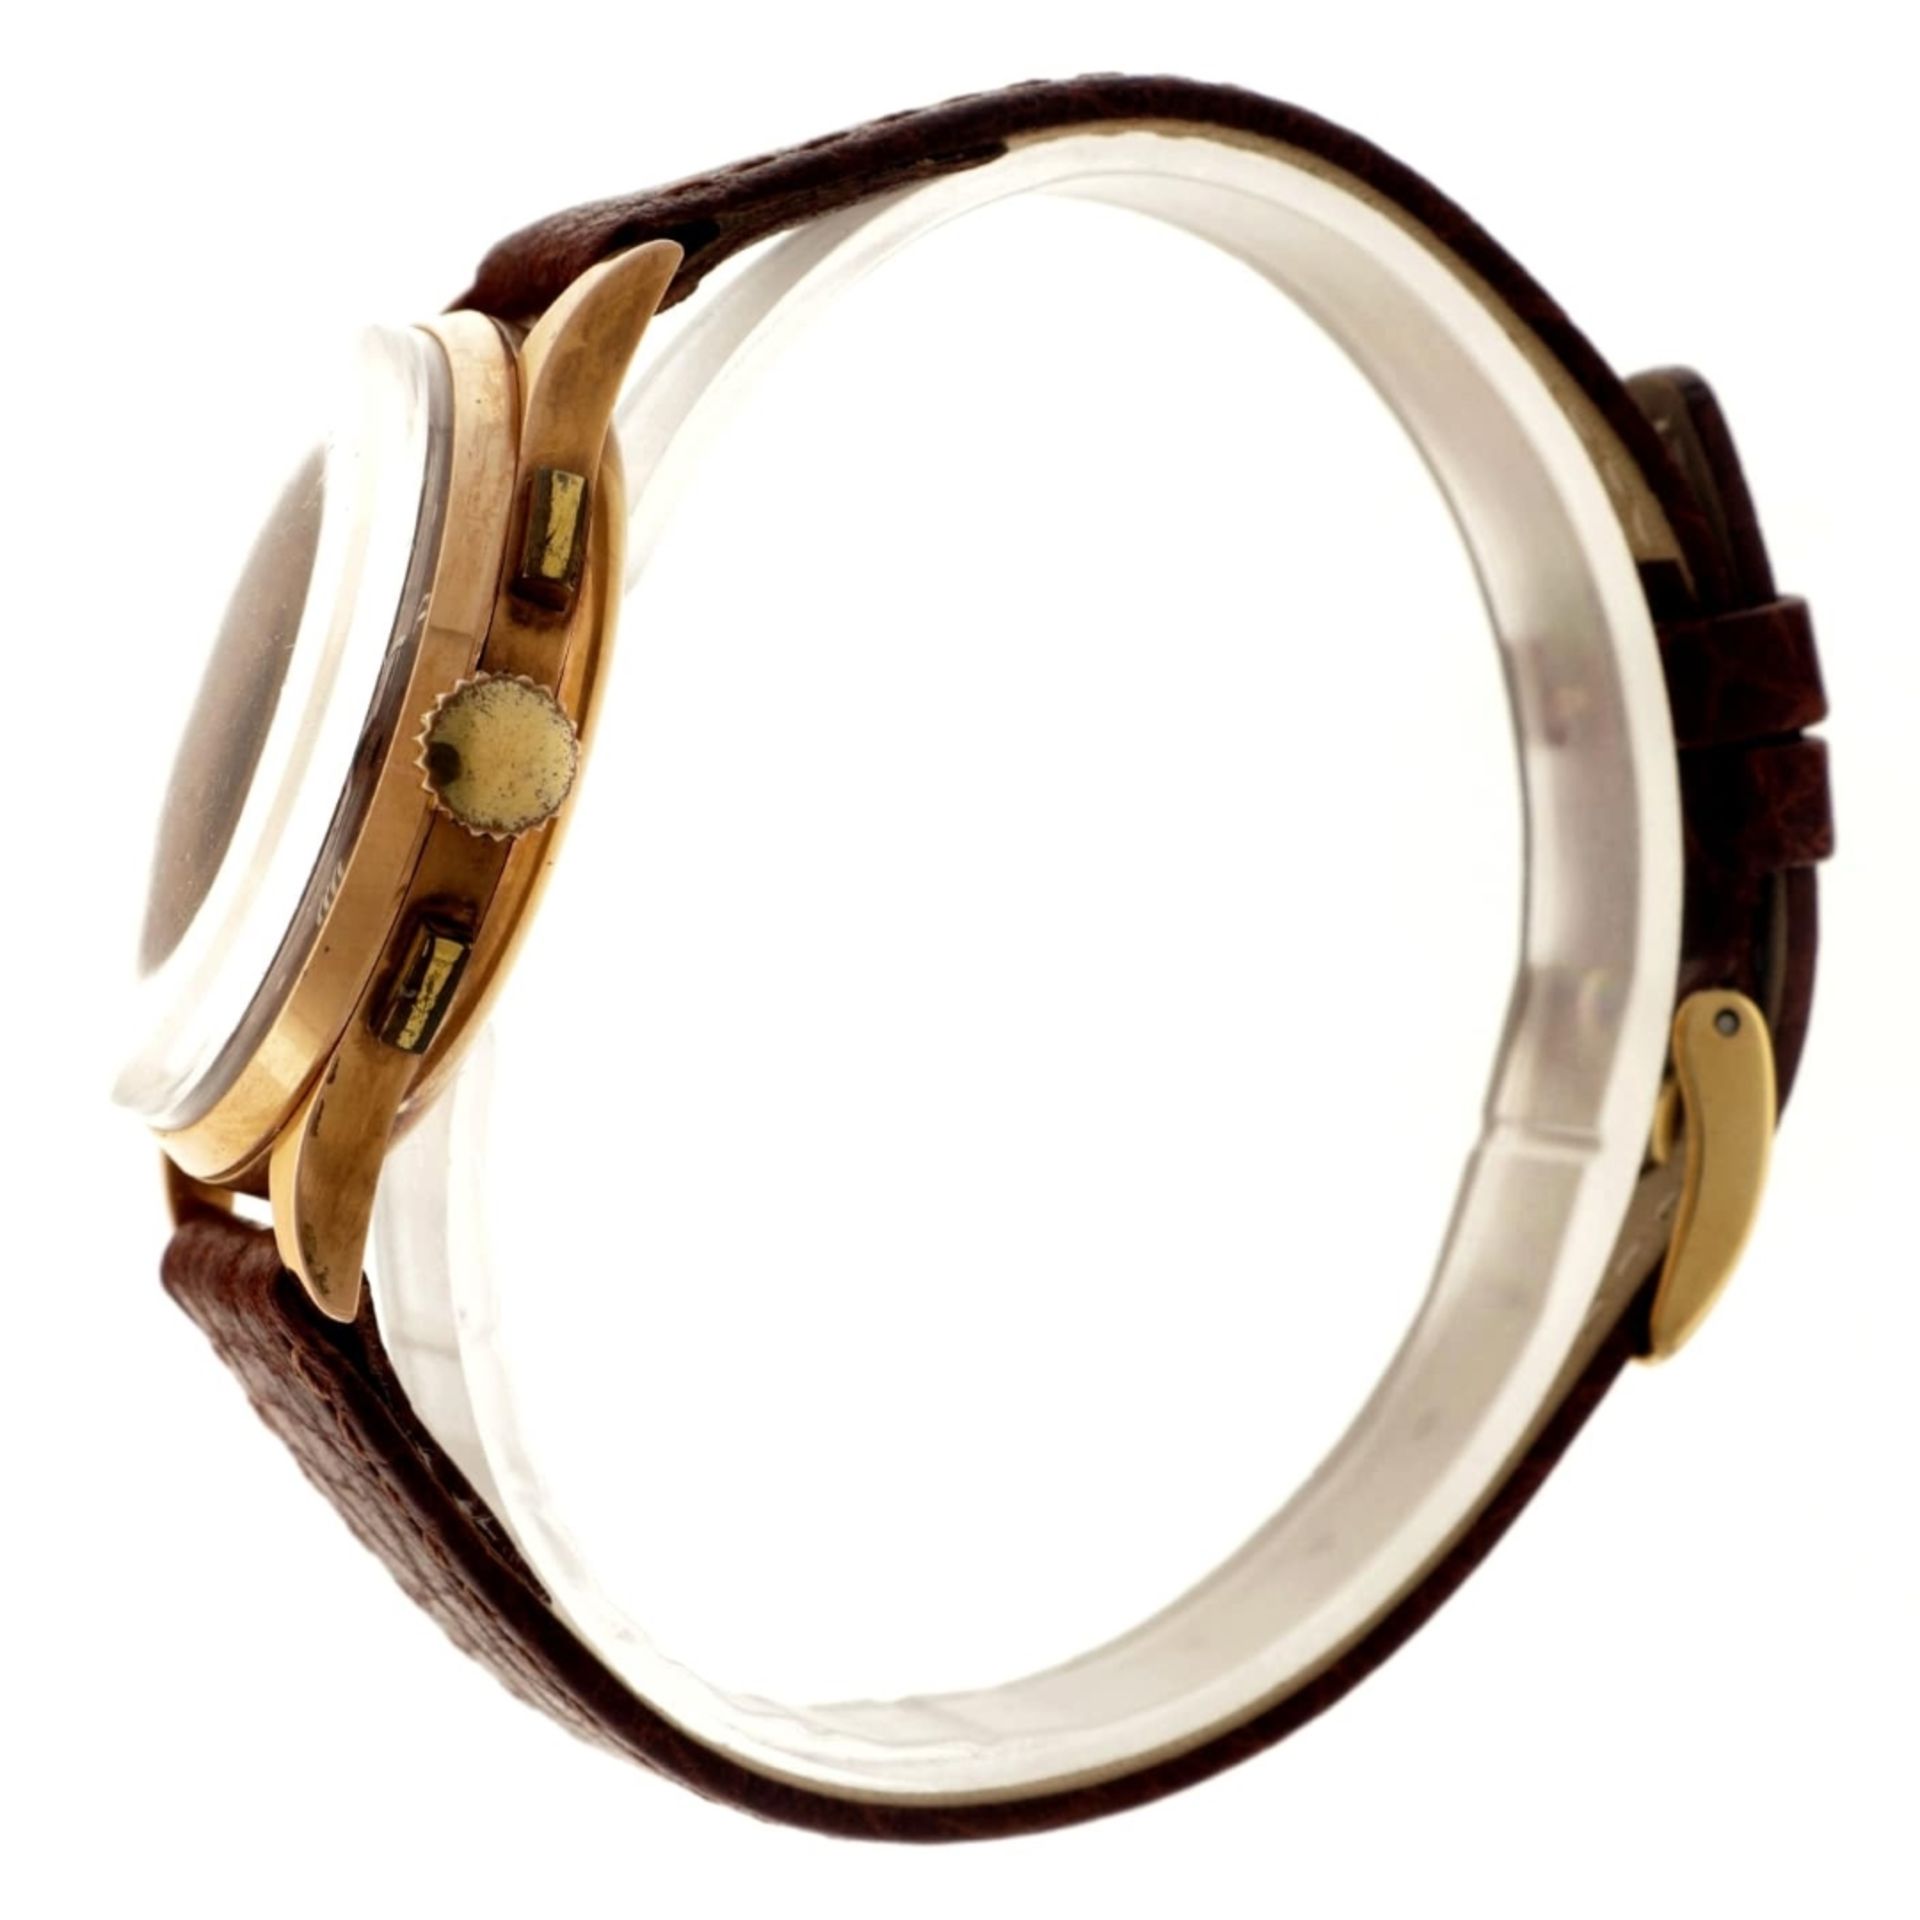 No Reserve - Baume & Mercier vintage 18K. chronograph - Men's watch. - Image 5 of 6